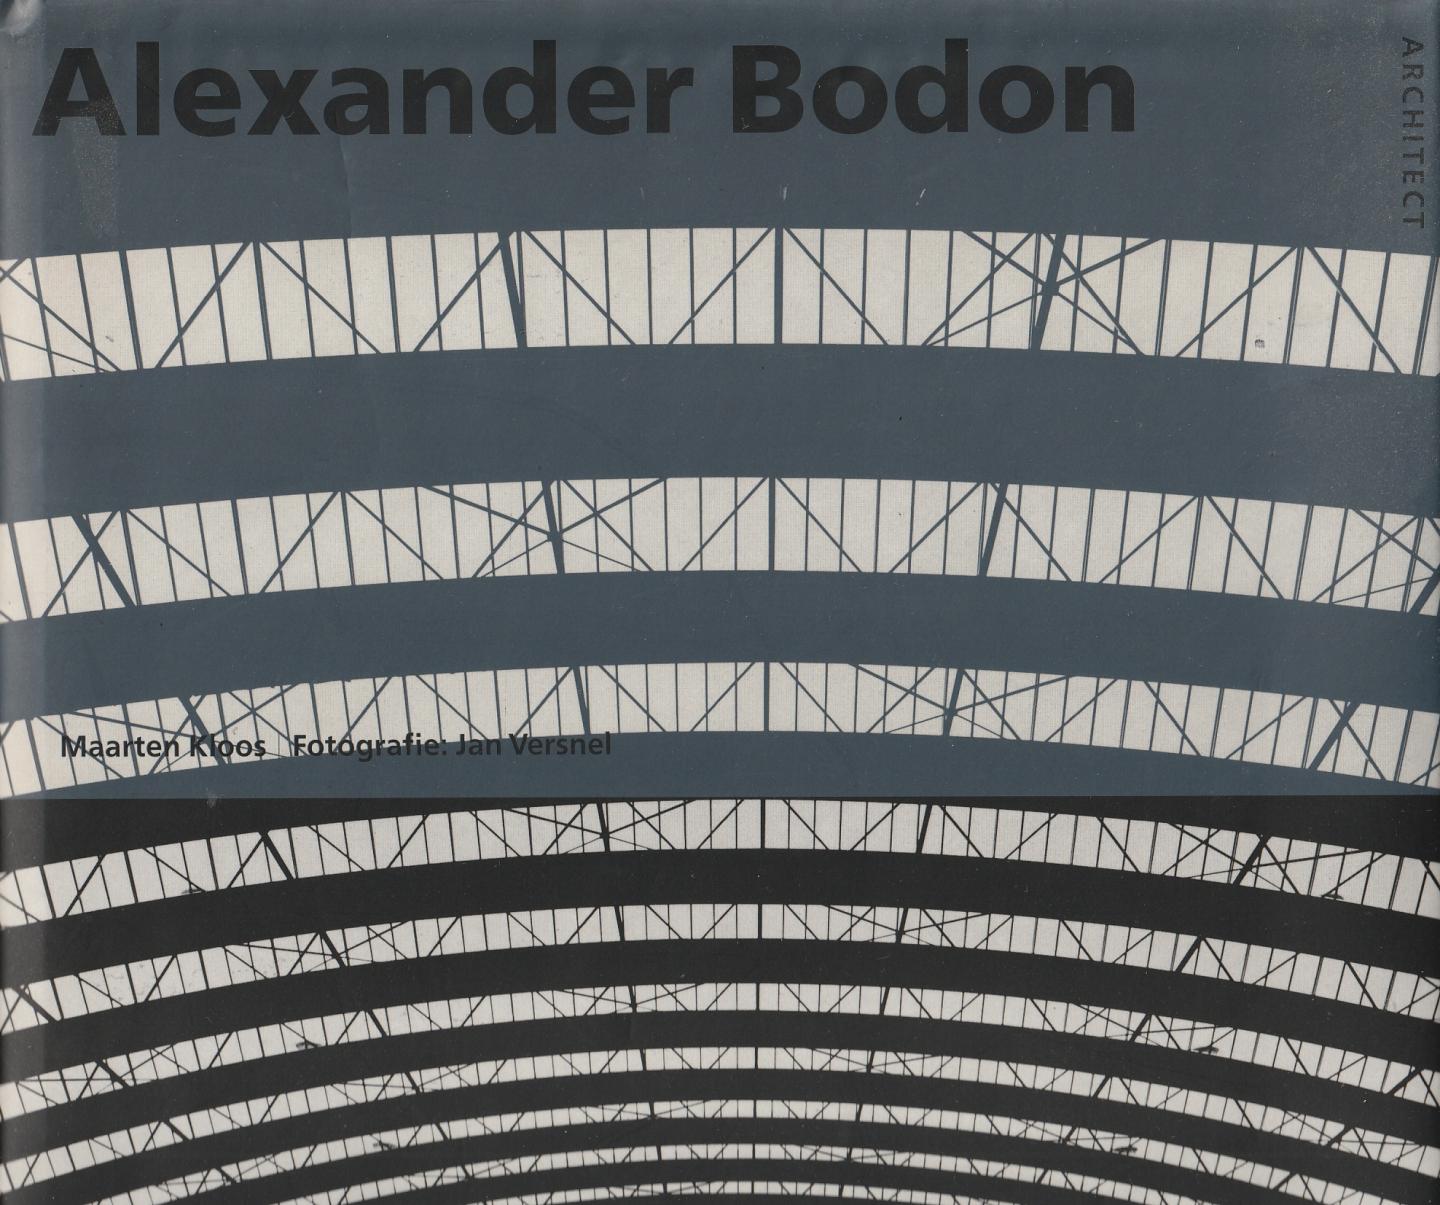 Kloos, Maarten - Alexander Bodon, architect